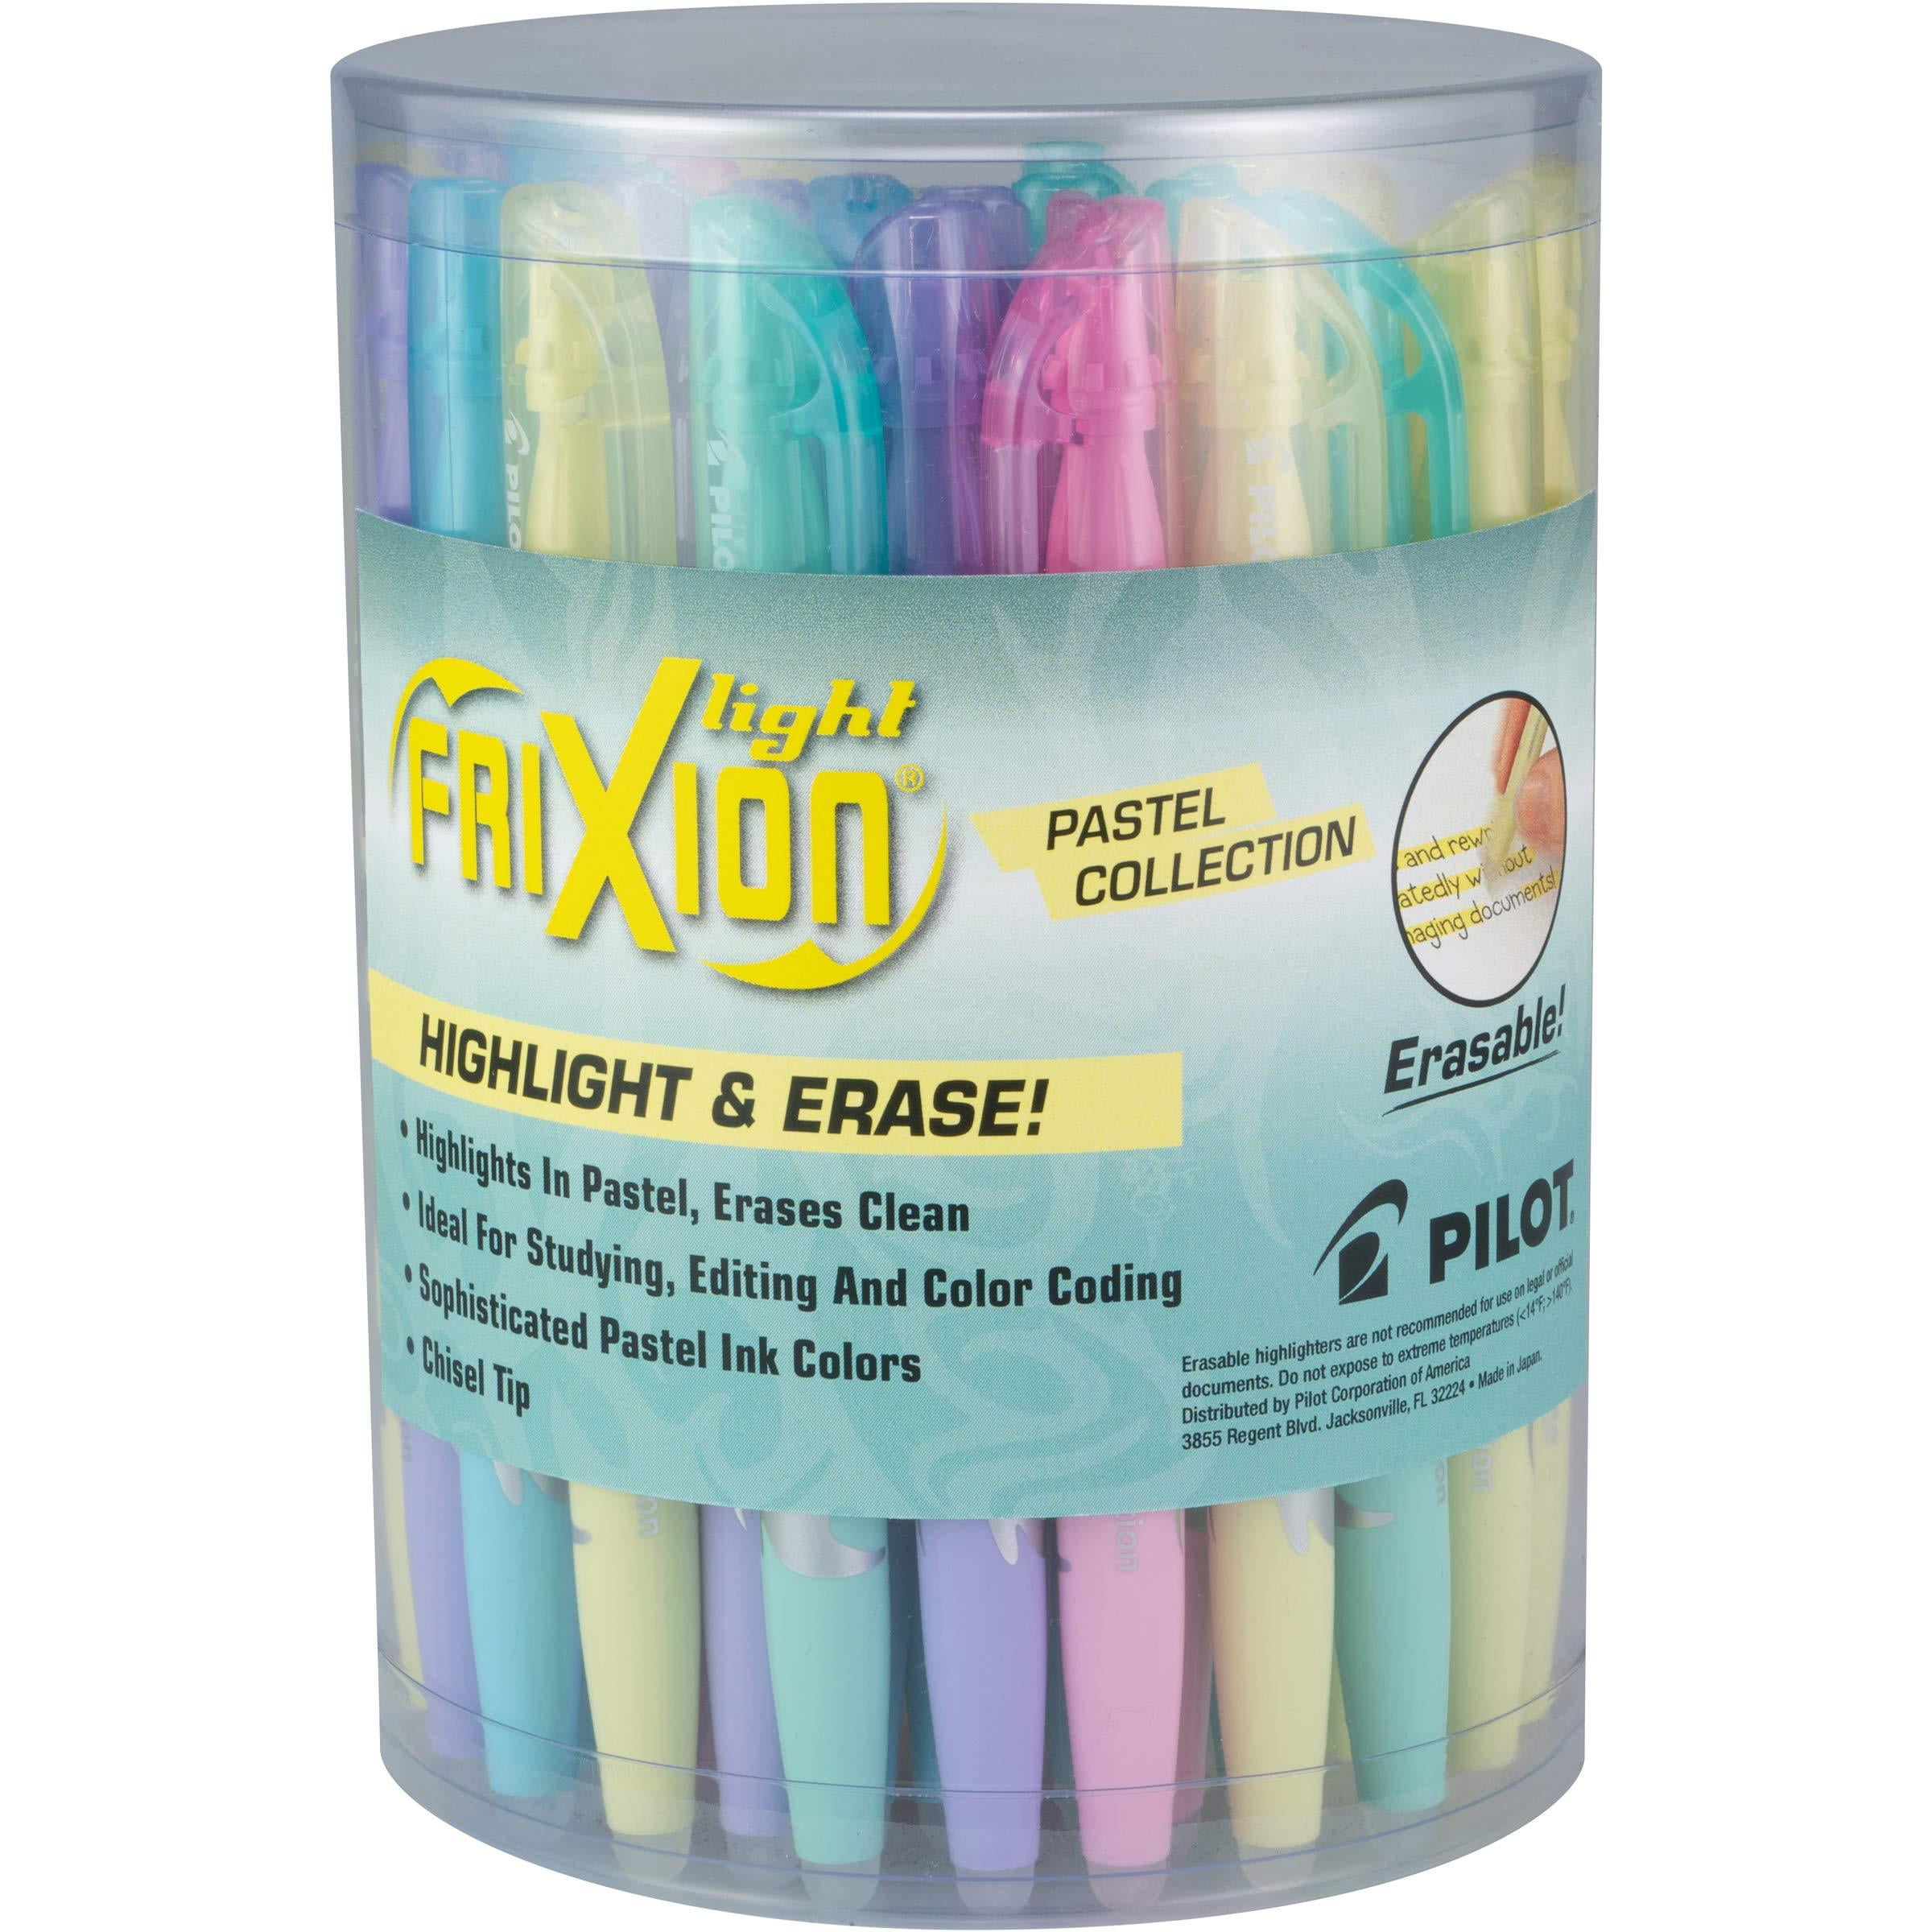 Pilot FriXion Light Erasable Highlighter - 6 Color Set